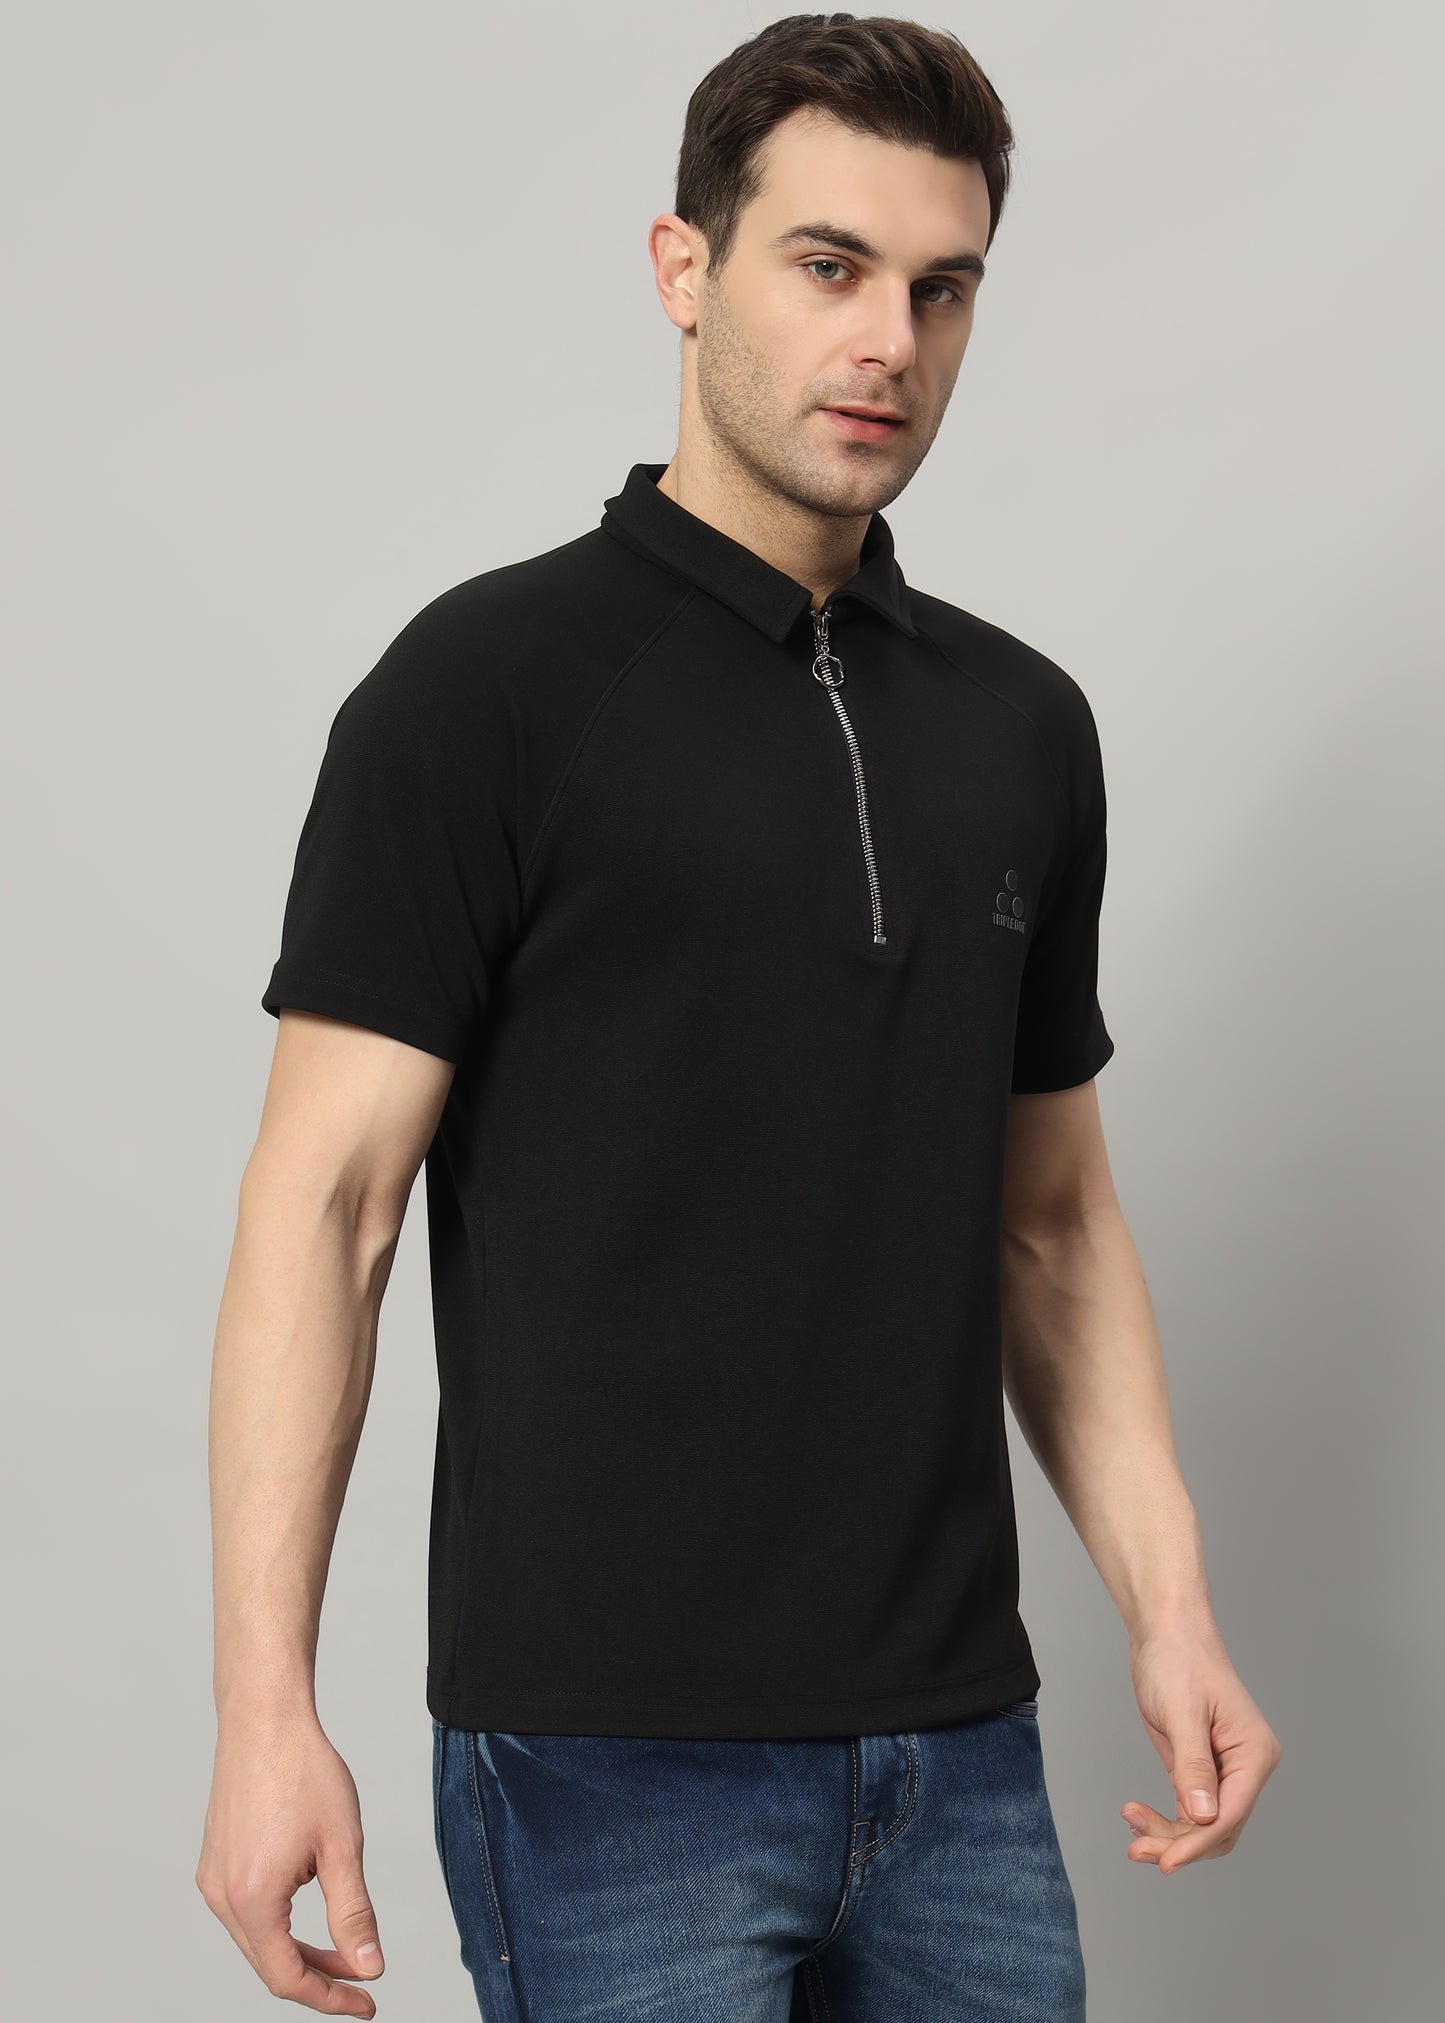 Polo T shirt for men's Triple dot